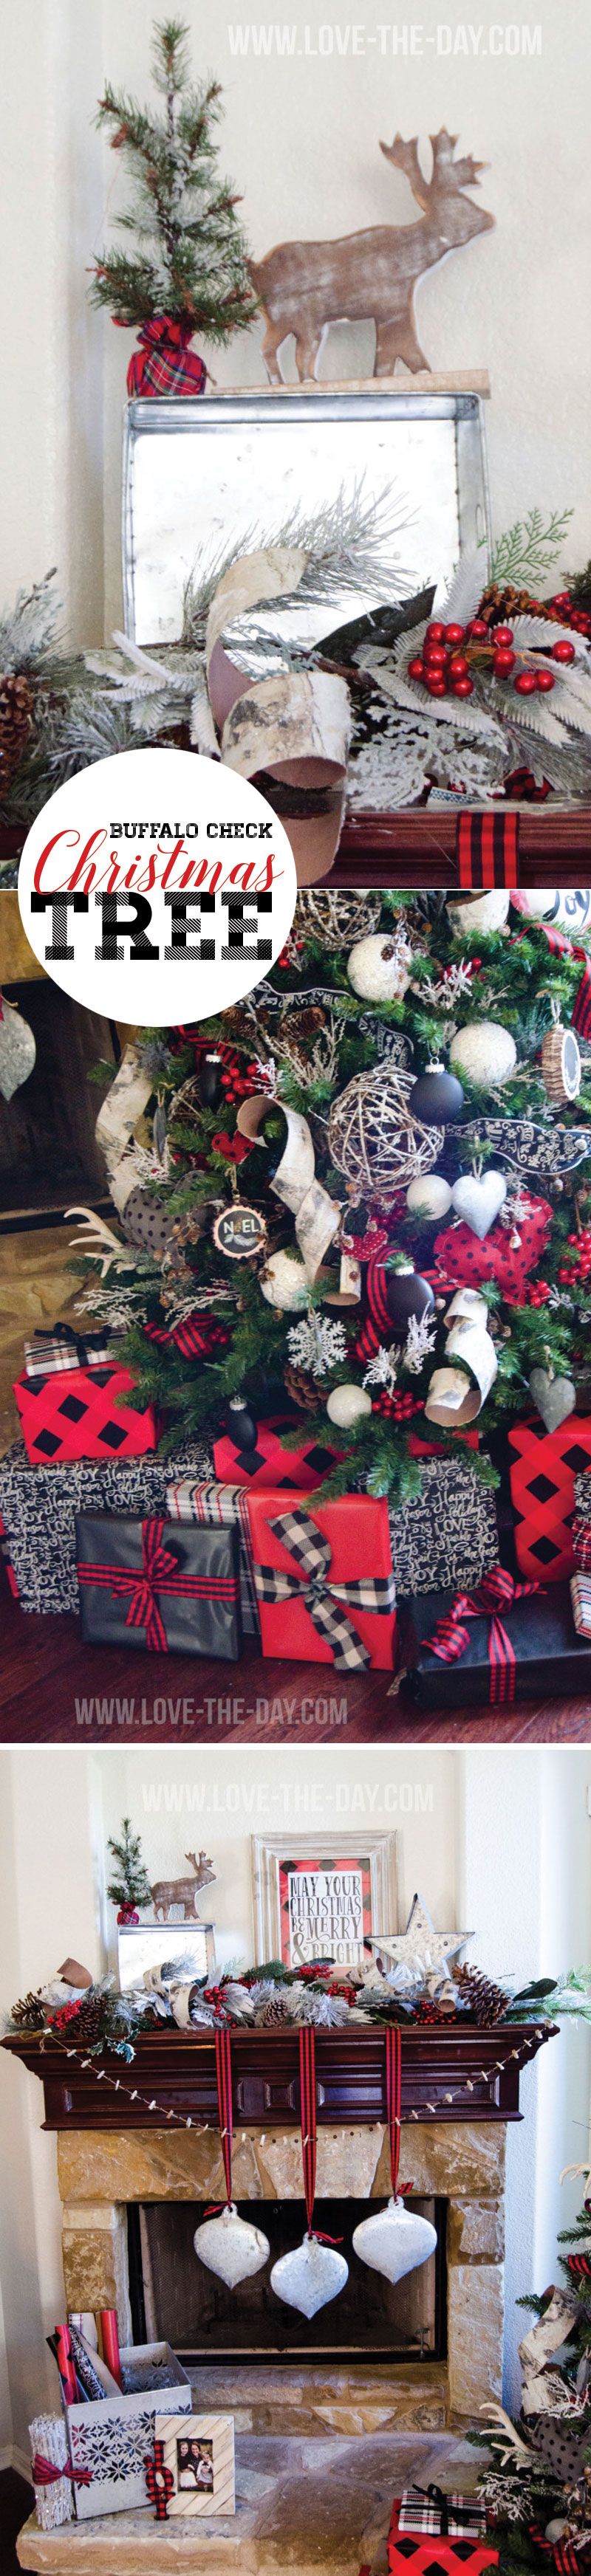 Buffalo Check Christmas Tree by Lindi Haws of Love The Day